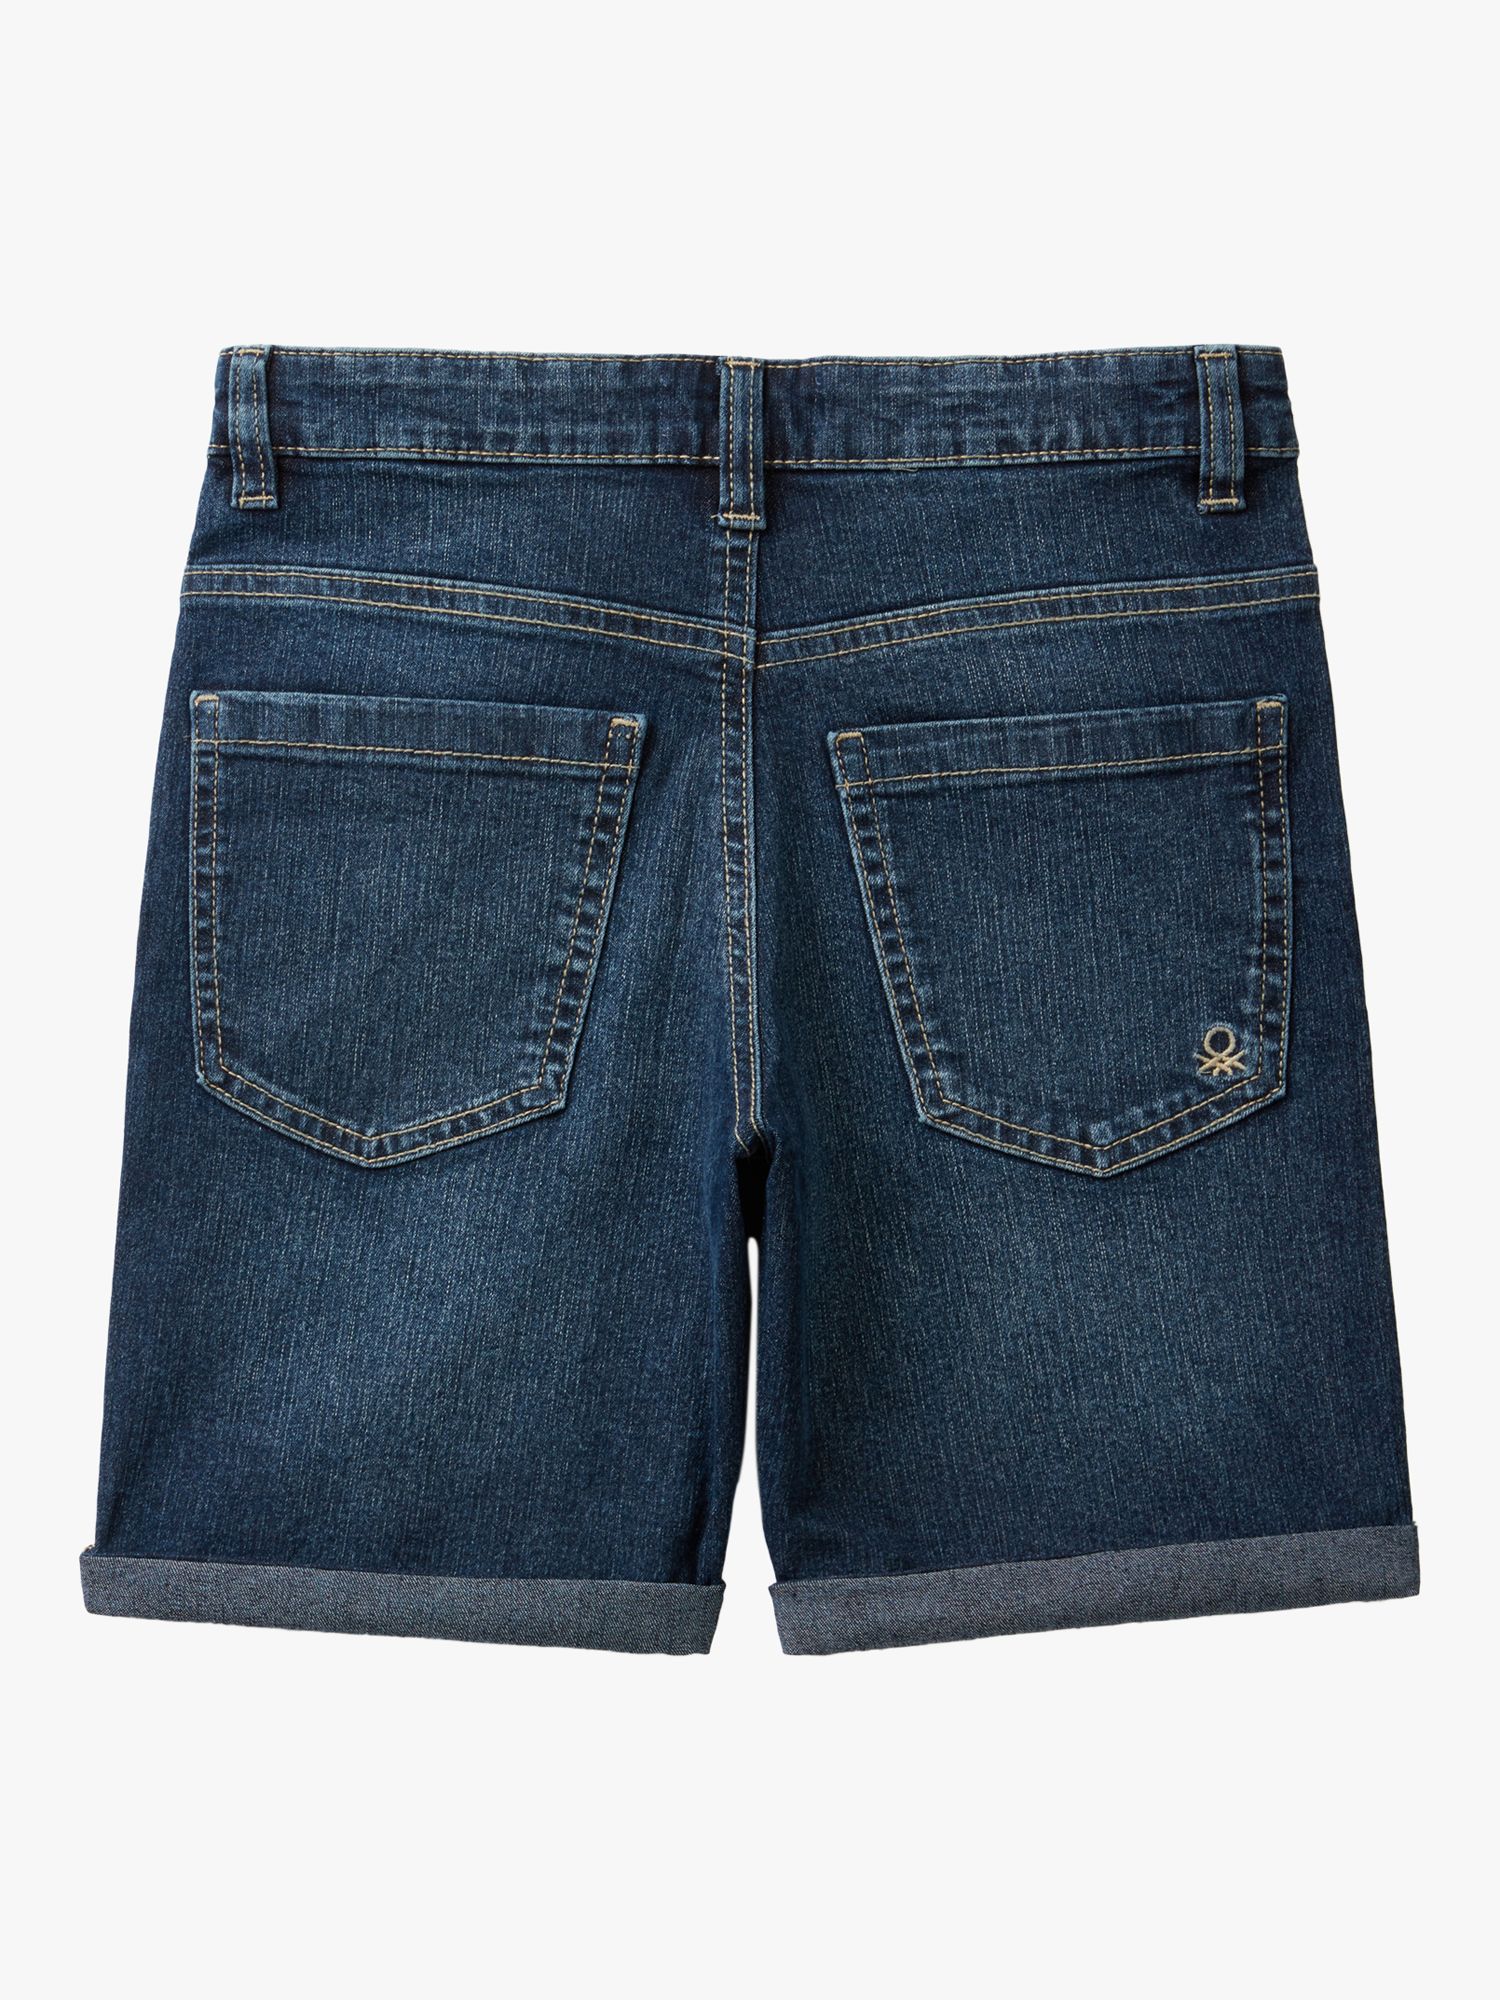 Benetton Kids' Classic Denim Shorts, Blue, 6-7 years